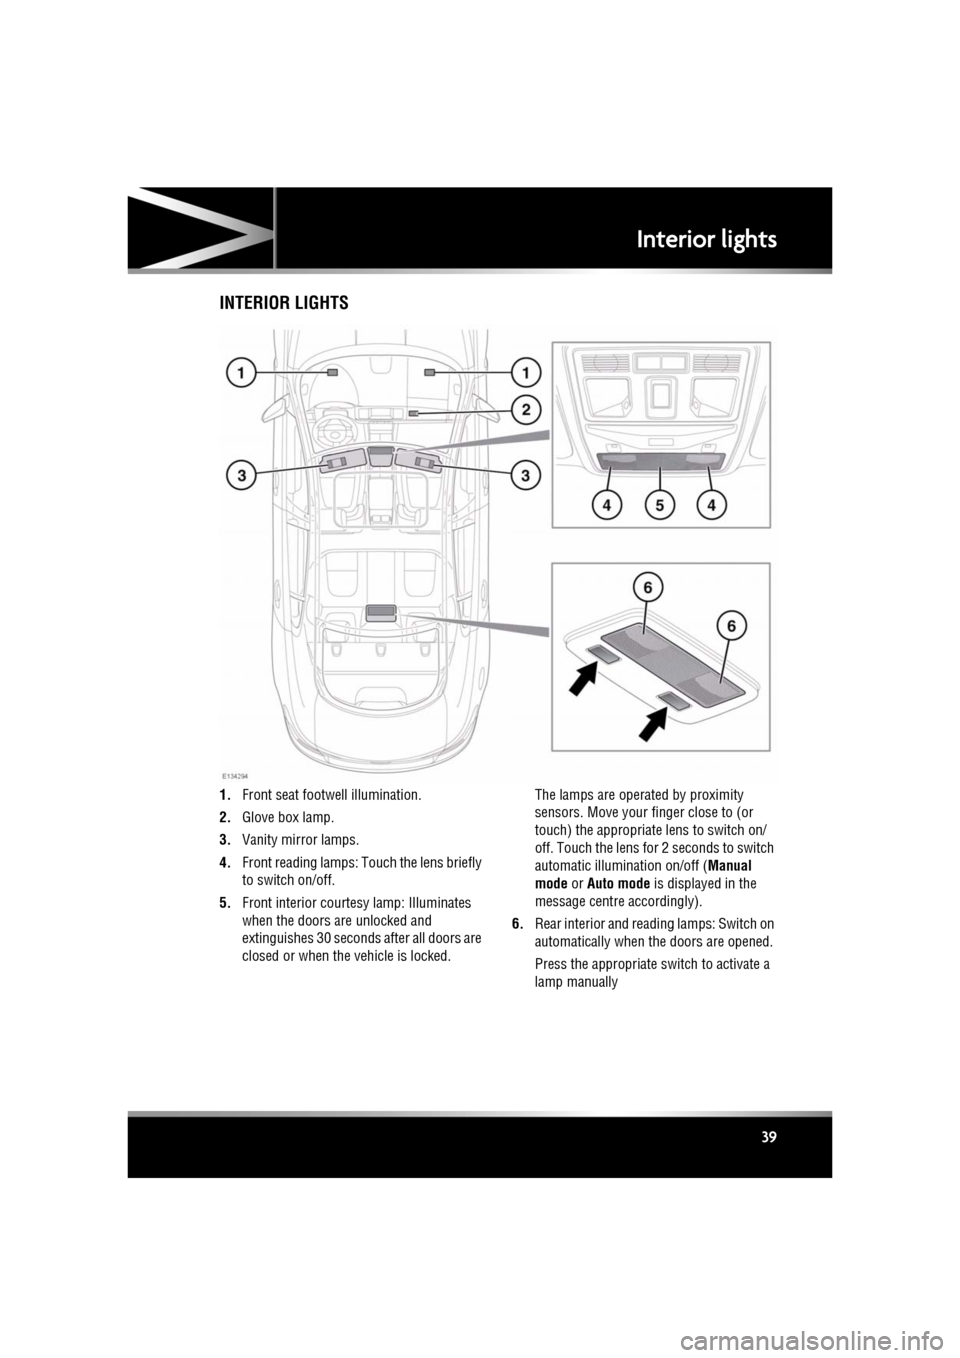 JAGUAR XF 2010 1.G Owners Manual R
(FM8) SEMCON JLR OWNER GUIDE VER 1.00  EURO
LANGUAGE: english-en; MARQUE: jaguar; MODEL: XF
Interior lights
39
Interior lightsINTERIOR LIGHTS
1. Front seat footwe ll illumination.
2. Glove box lamp.